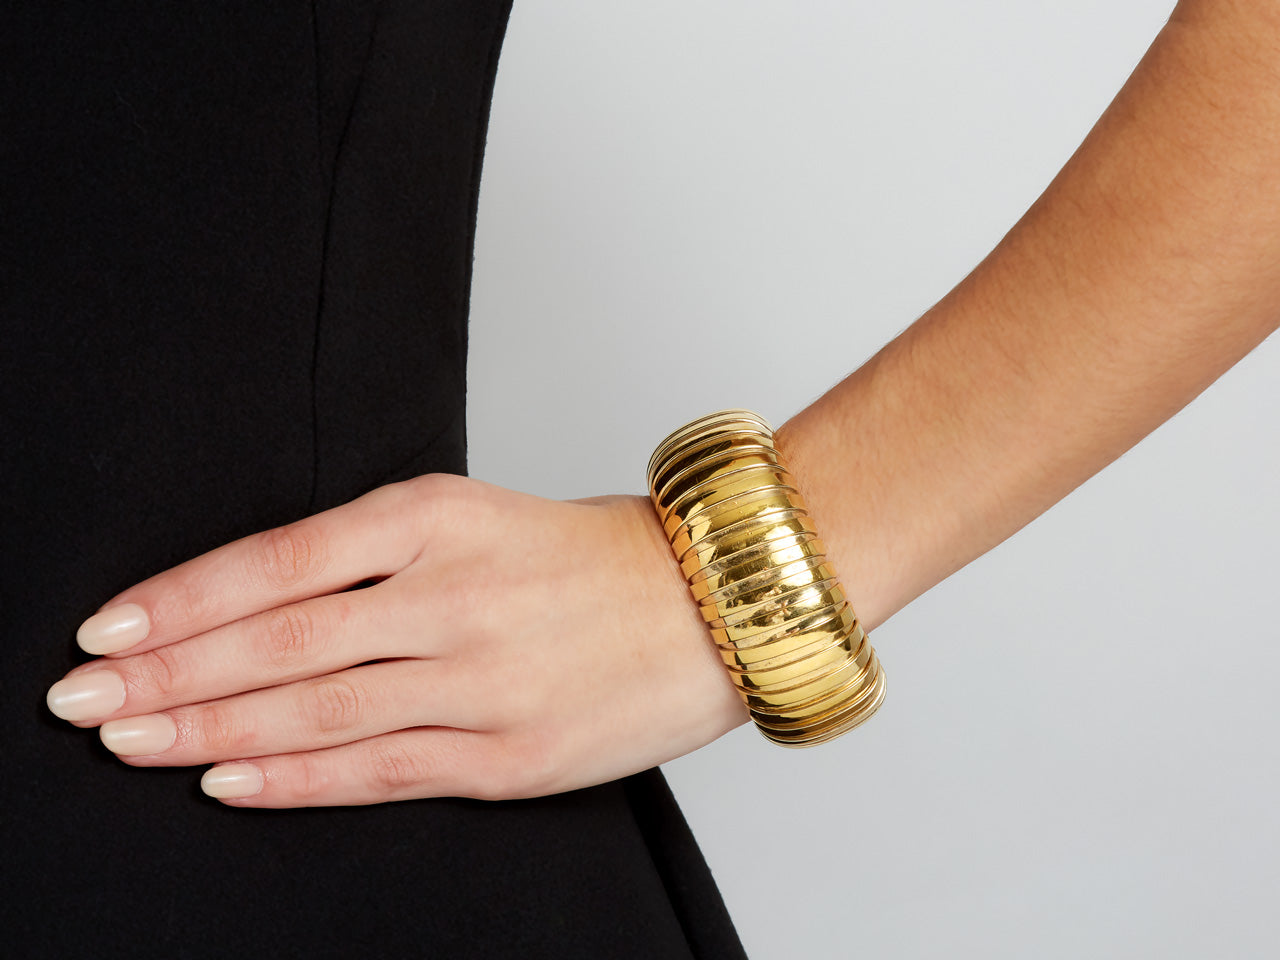 Large Wide Domed Cuff Bracelet in 18K Gold, by Beladora